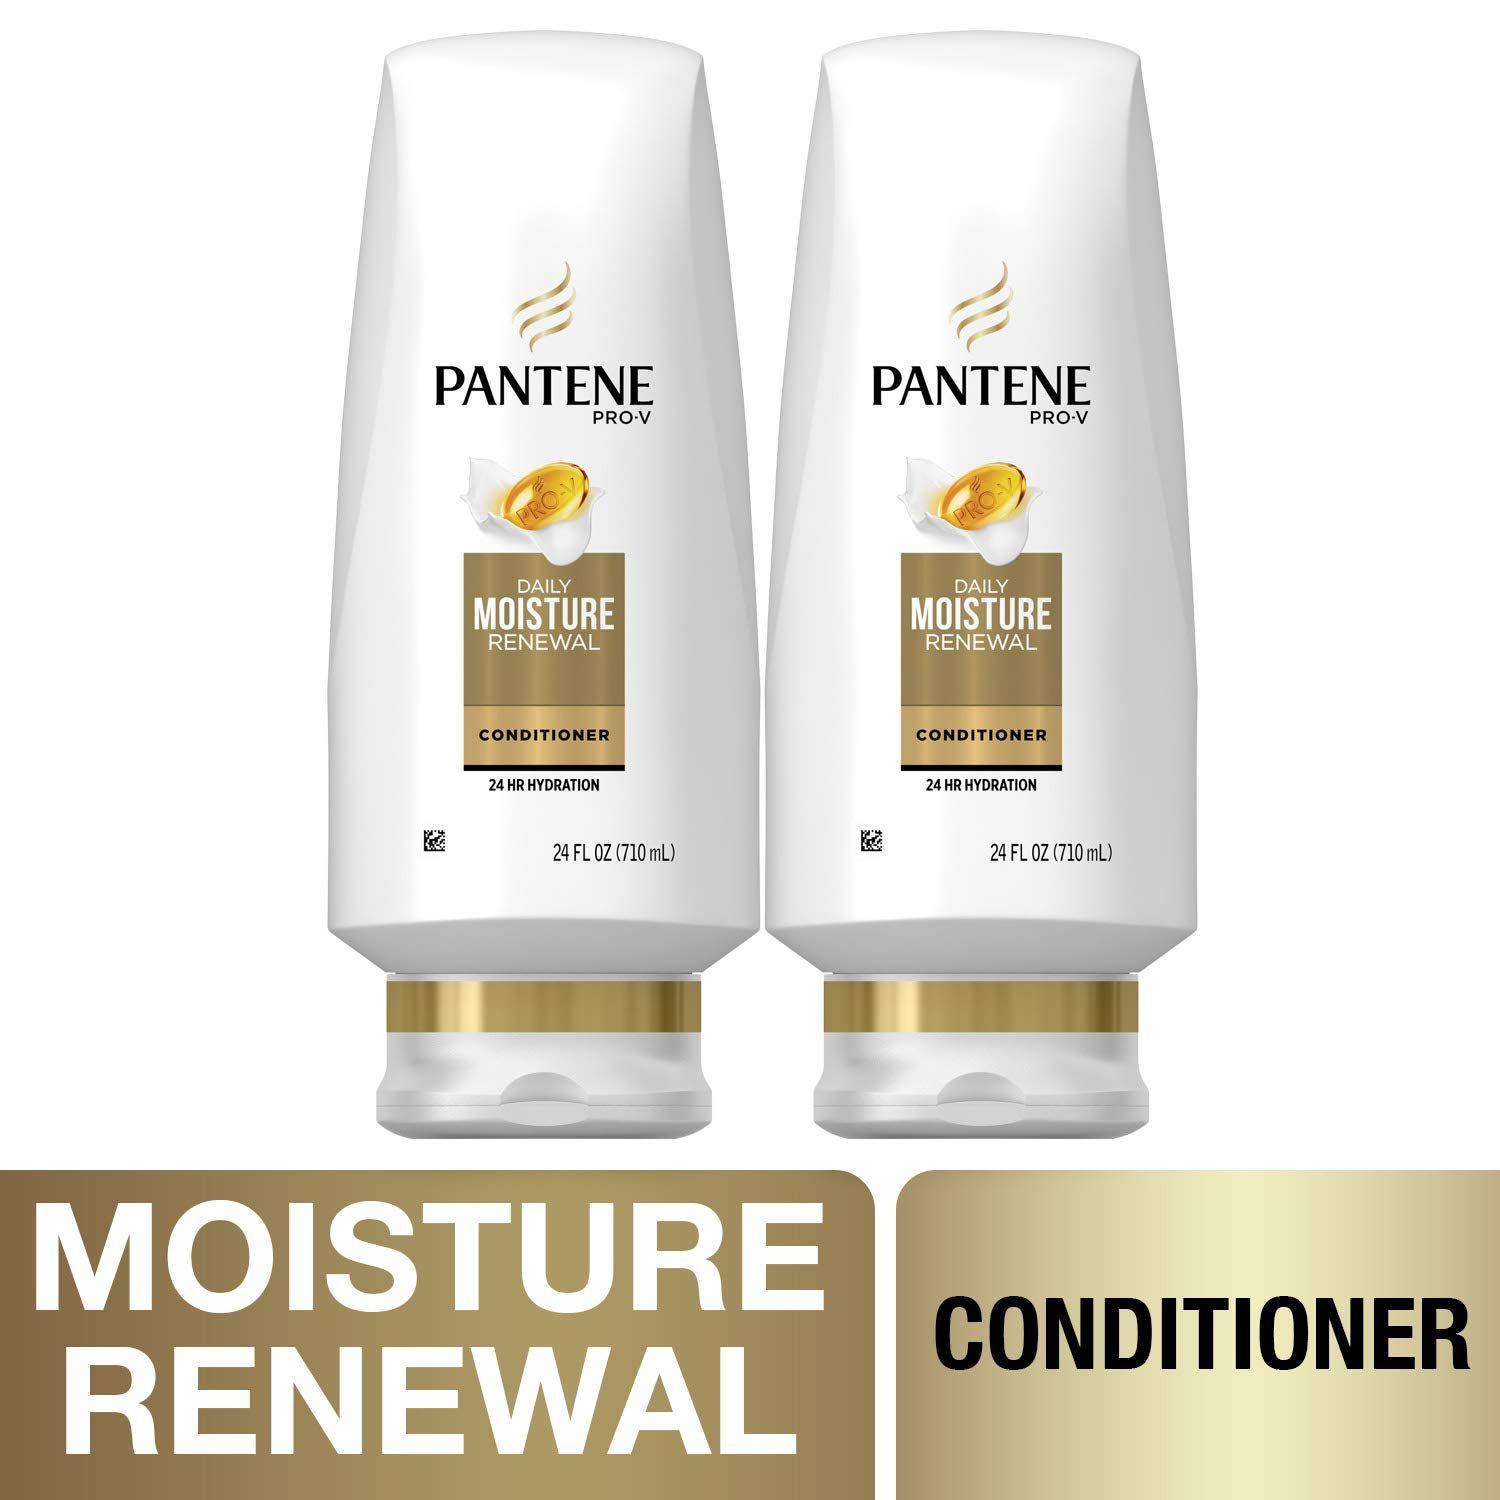 Pantene Logo - Amazon.com: Pantene, Conditioner, Pro-V Daily Moisture Renewal for ...